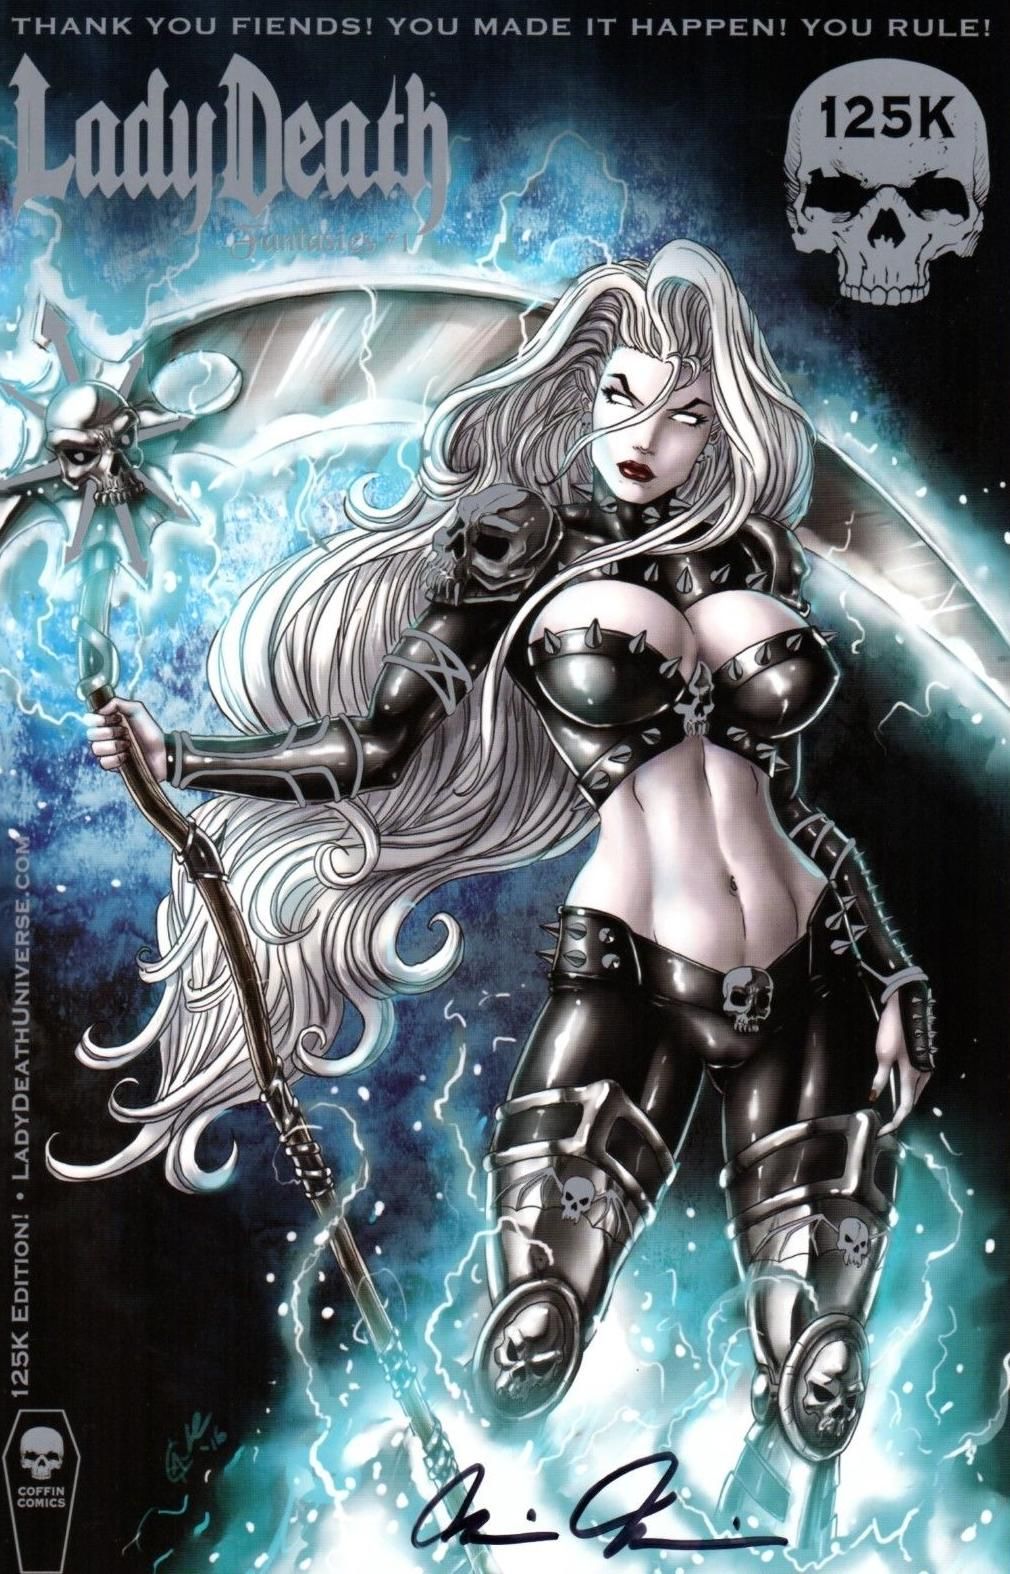 Lady Death: Fantasies #1 (125K Edition) Comic